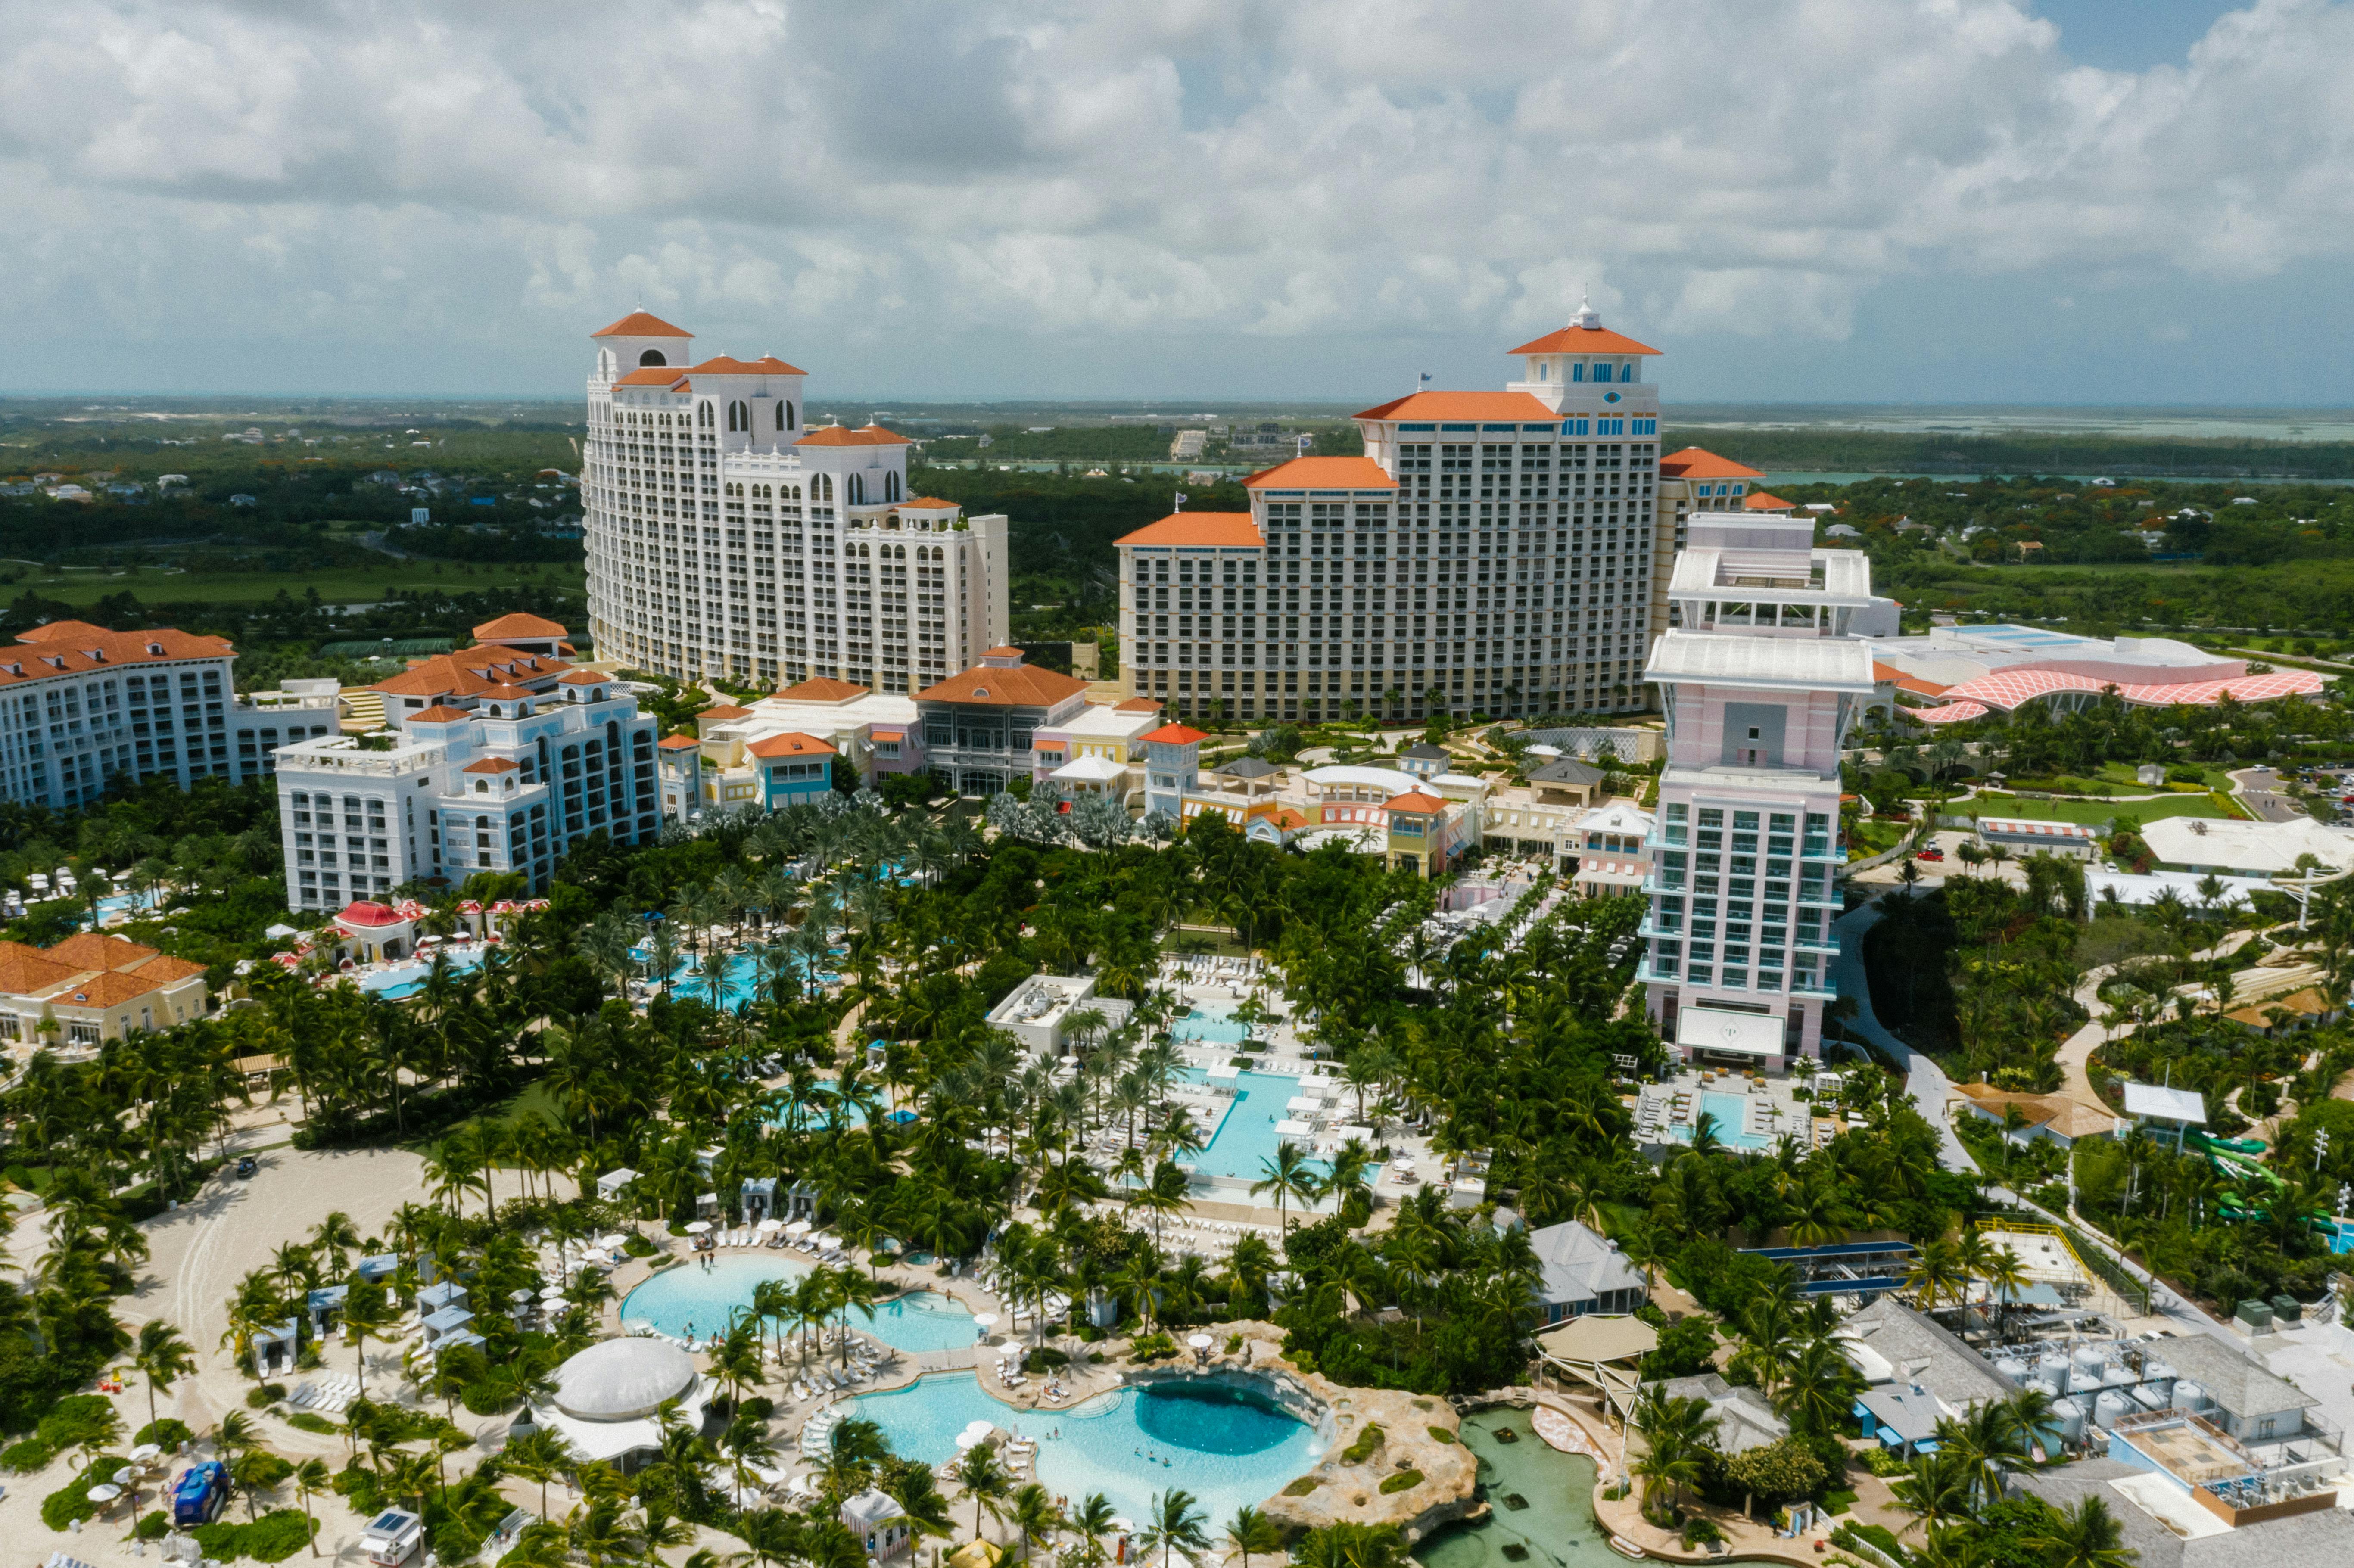 An aerial shot of the Baha Mar Resort in the Bahamas | Source: Pexels